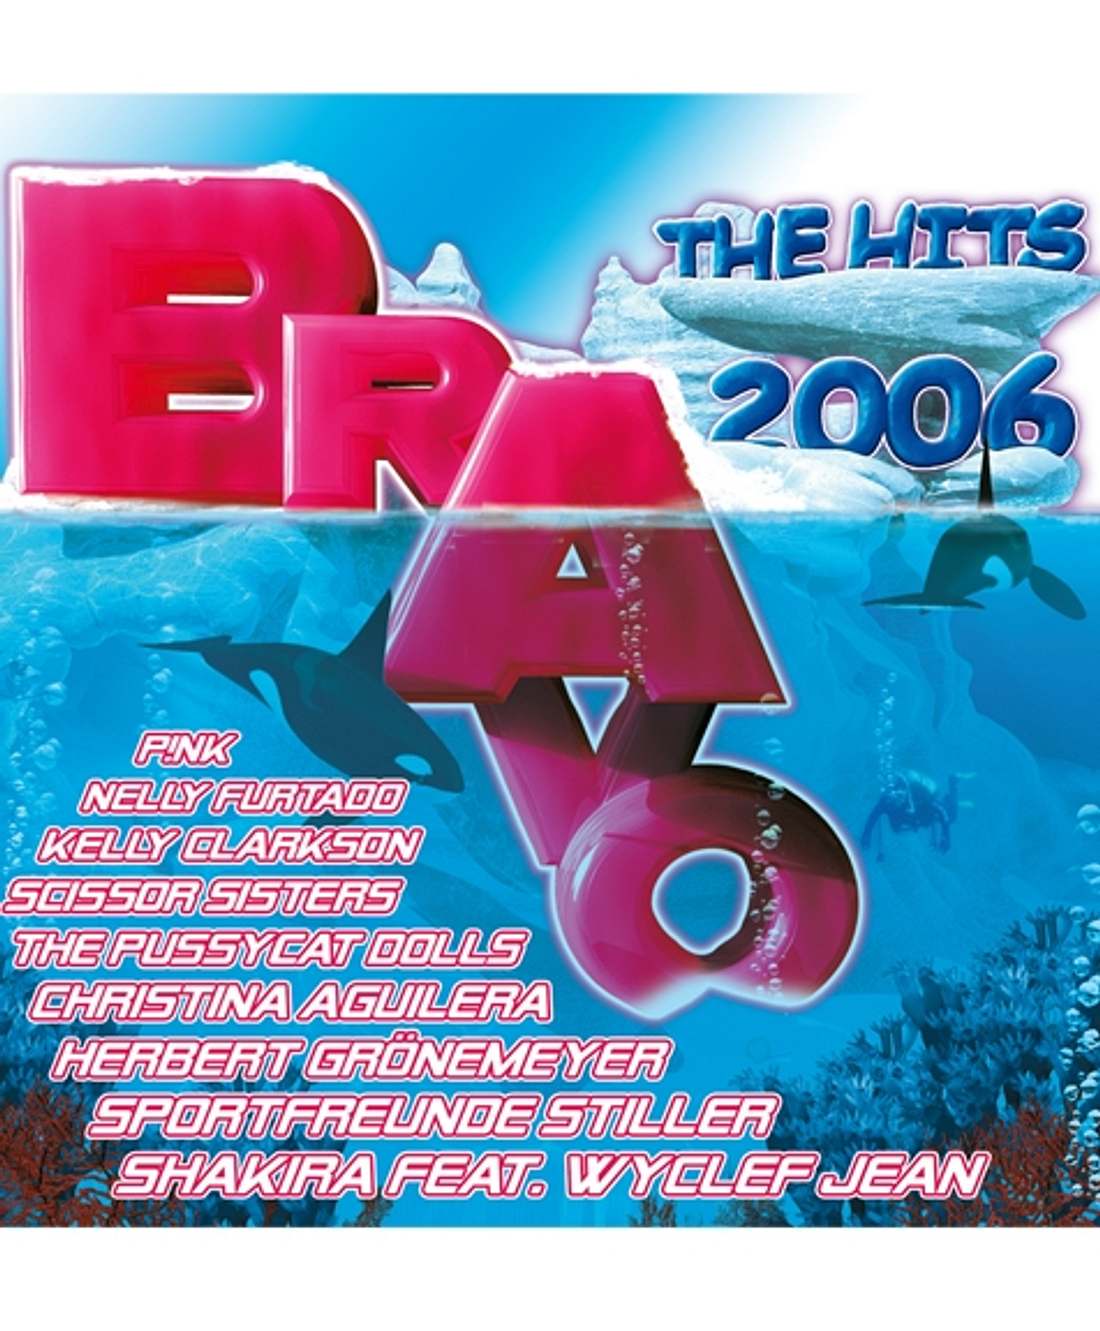 BRAVO The Hits 2006 - ab 24. 11 zu kaufen!